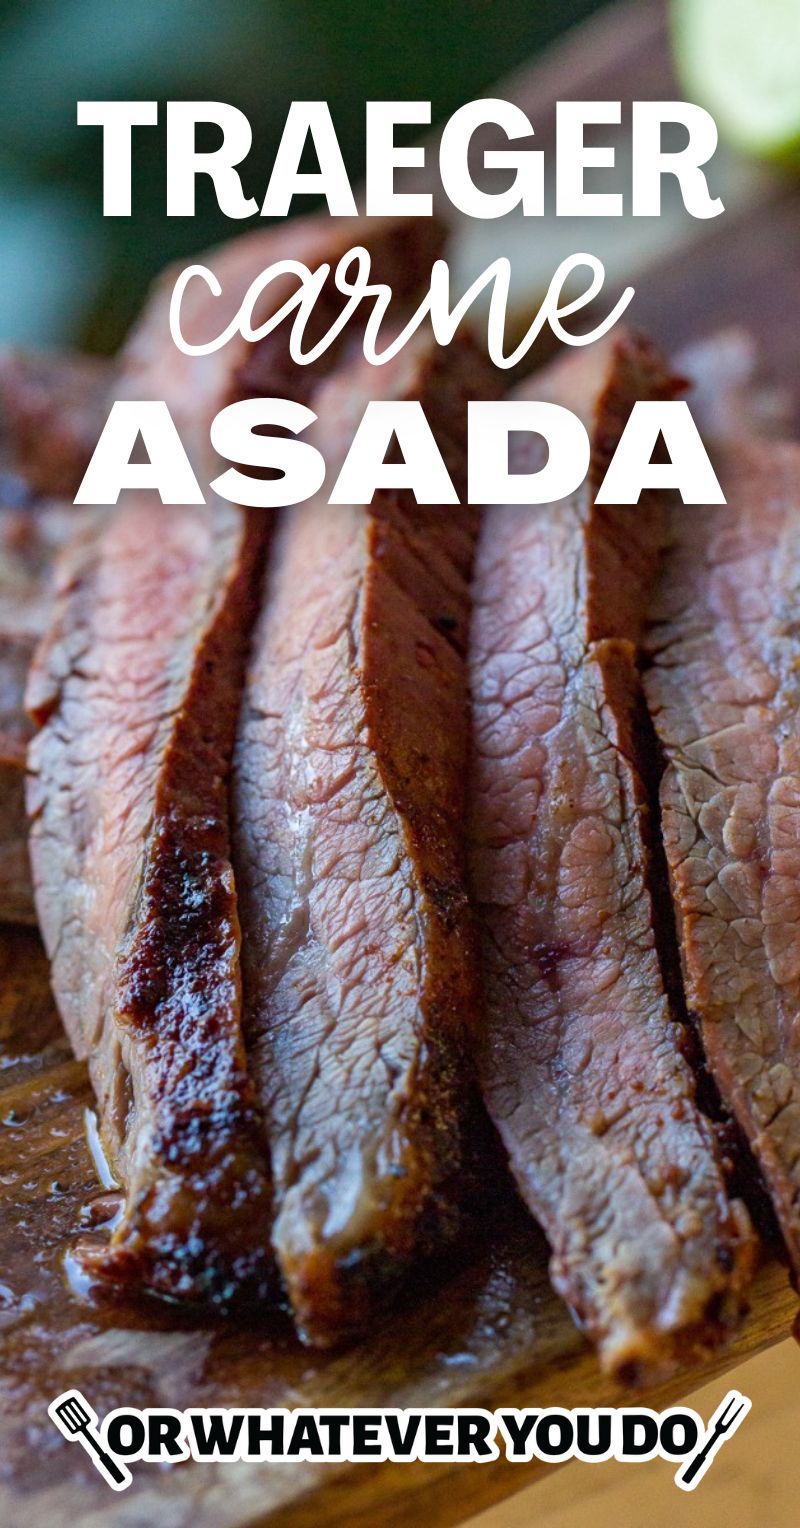 Traeger Carne Asada